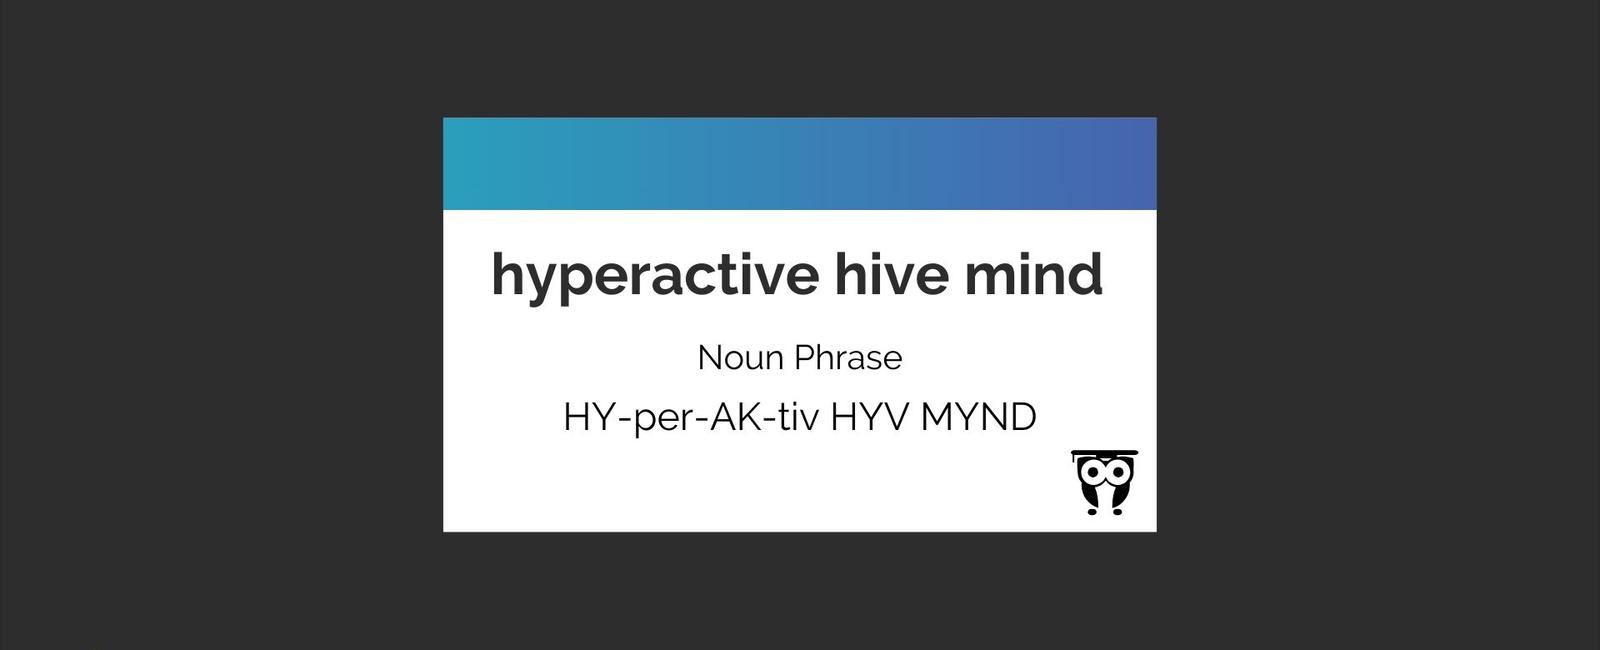 Hyperactive Hive Mind